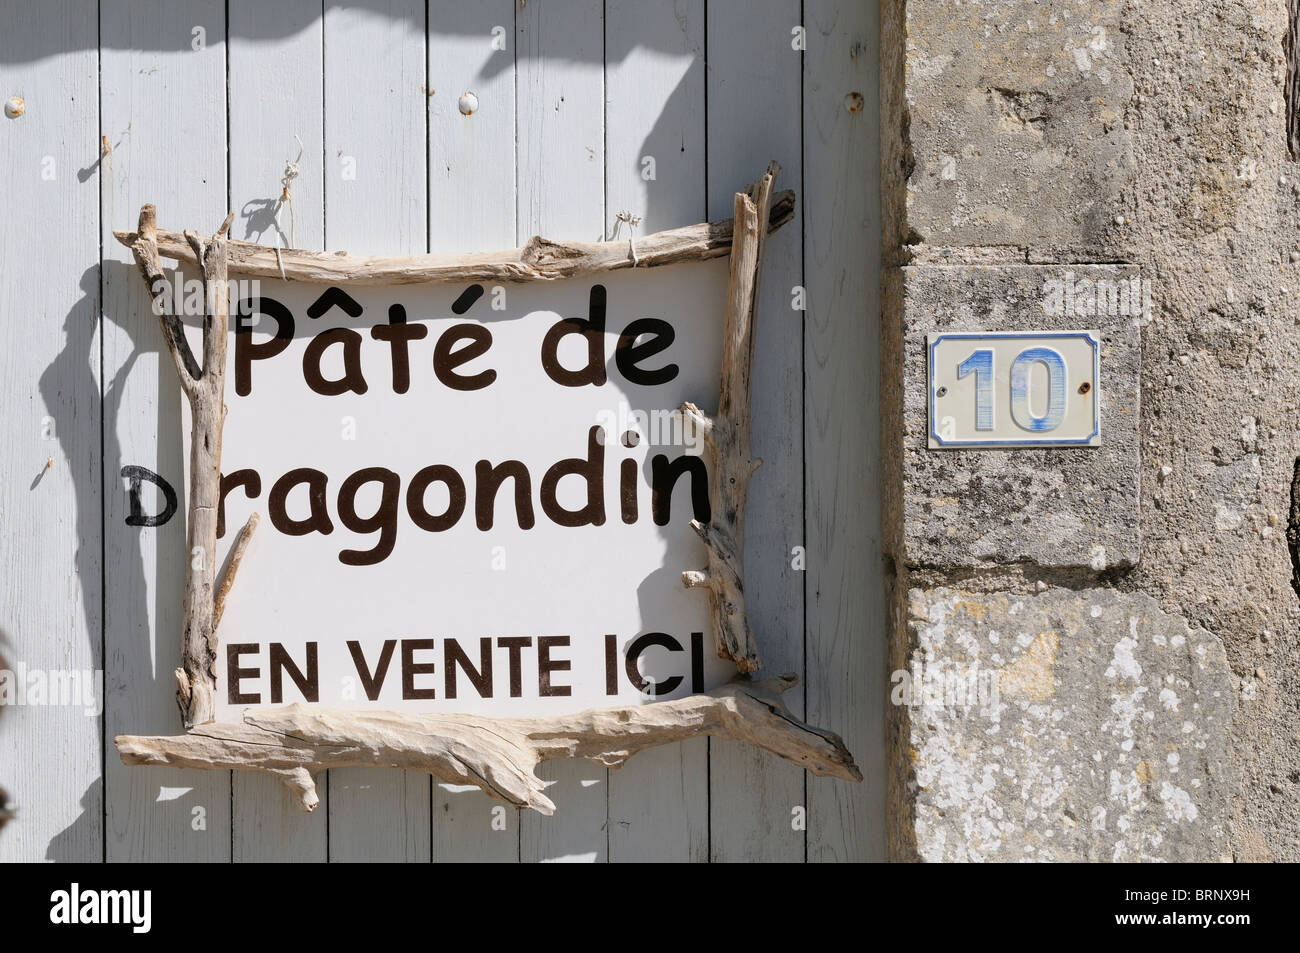 Stock photo of a sign selling pate de Ragondin. Stock Photo